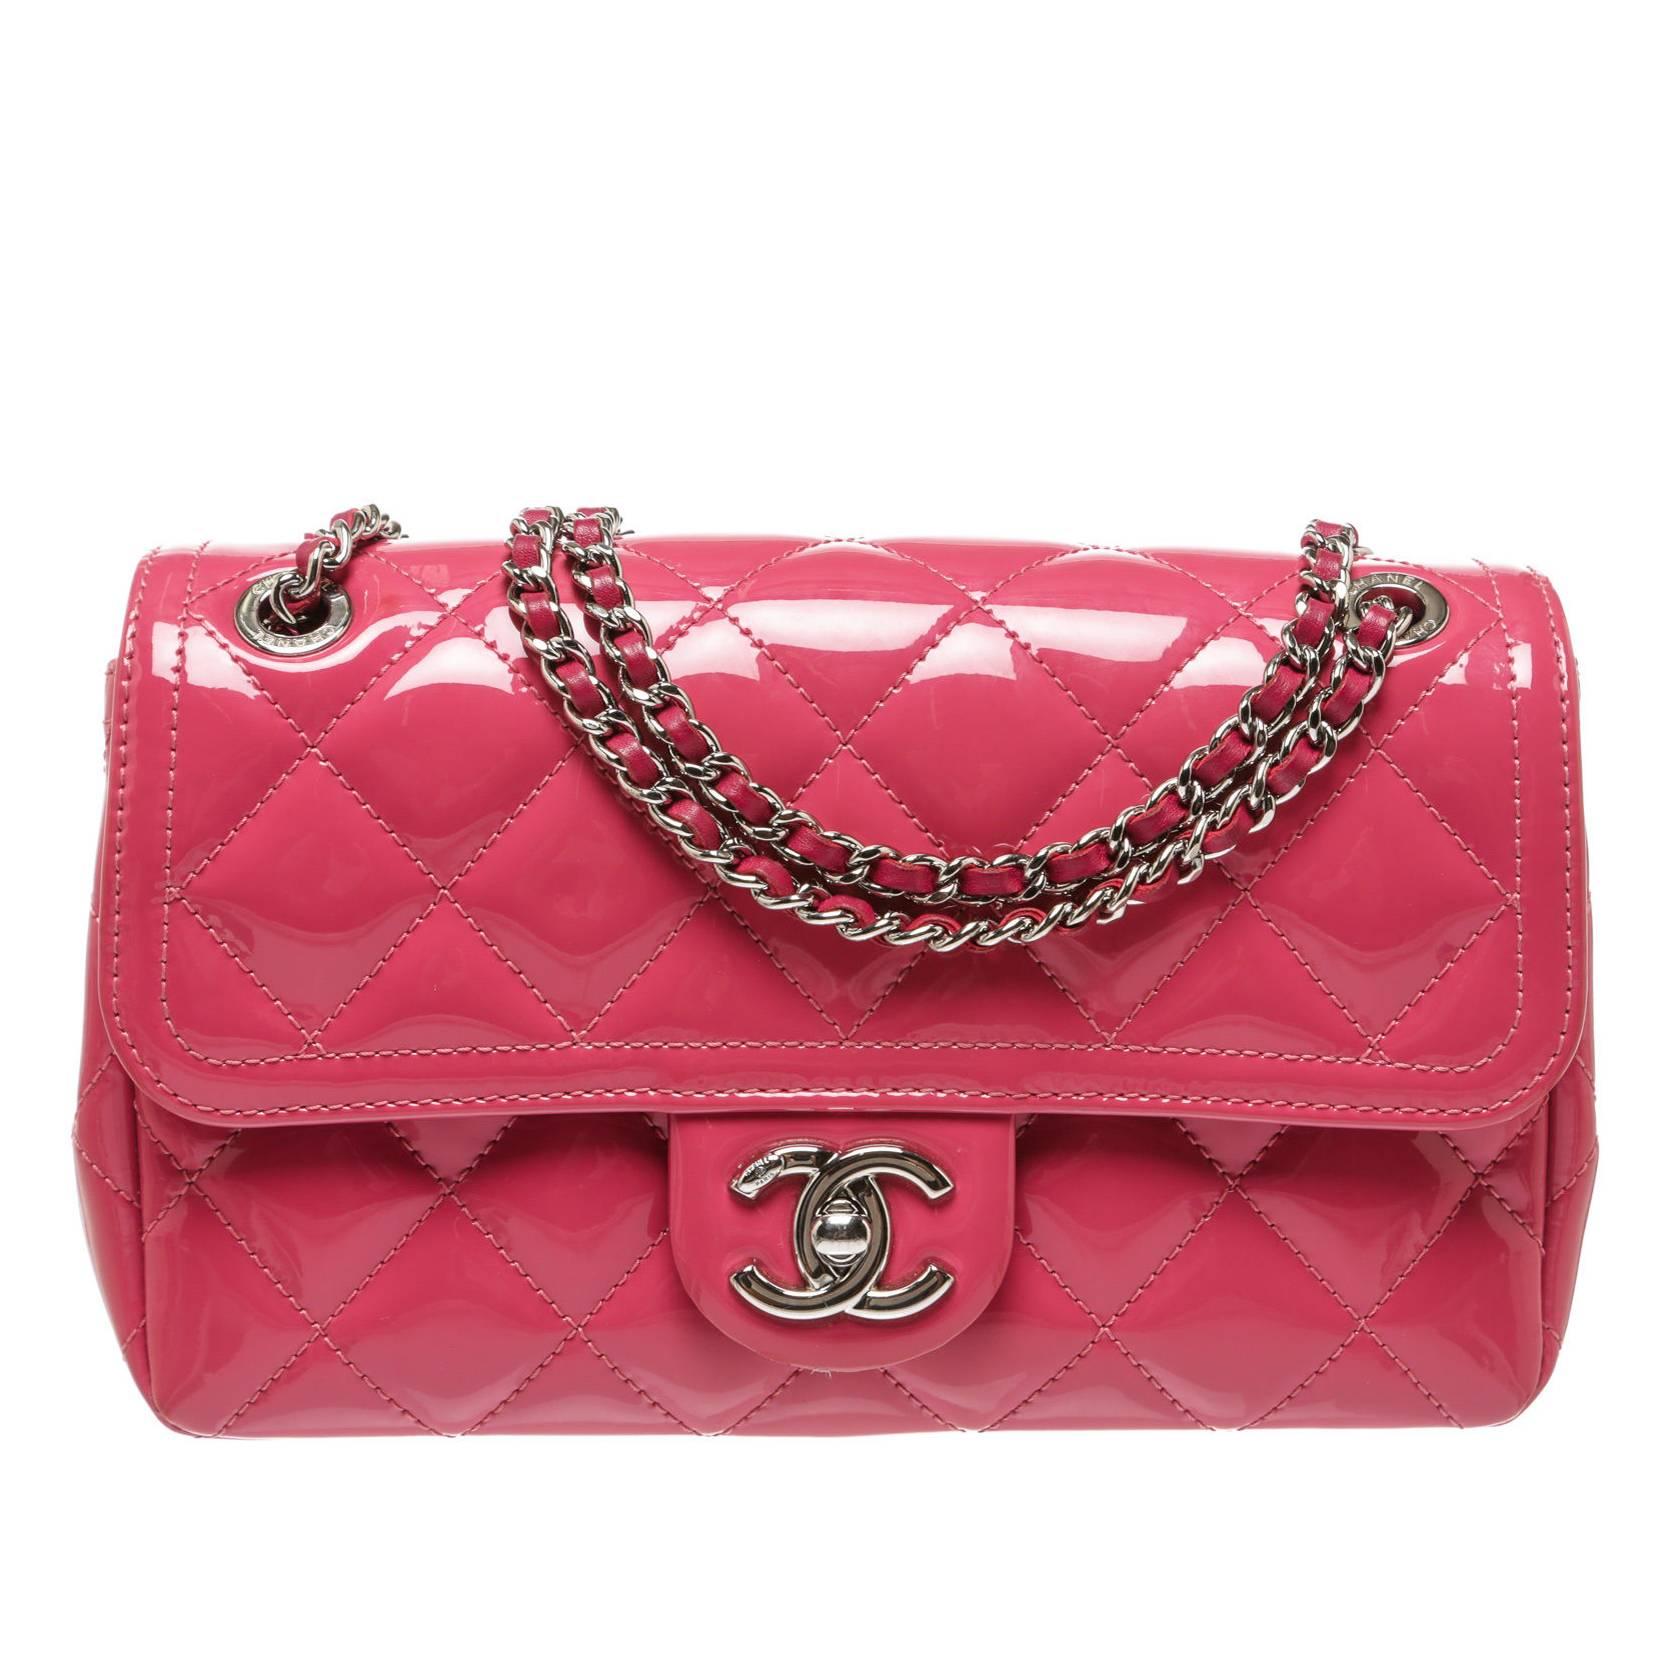 Chanel Pink Quilted Patent Leather Flap Shoulder Handbag For Sale